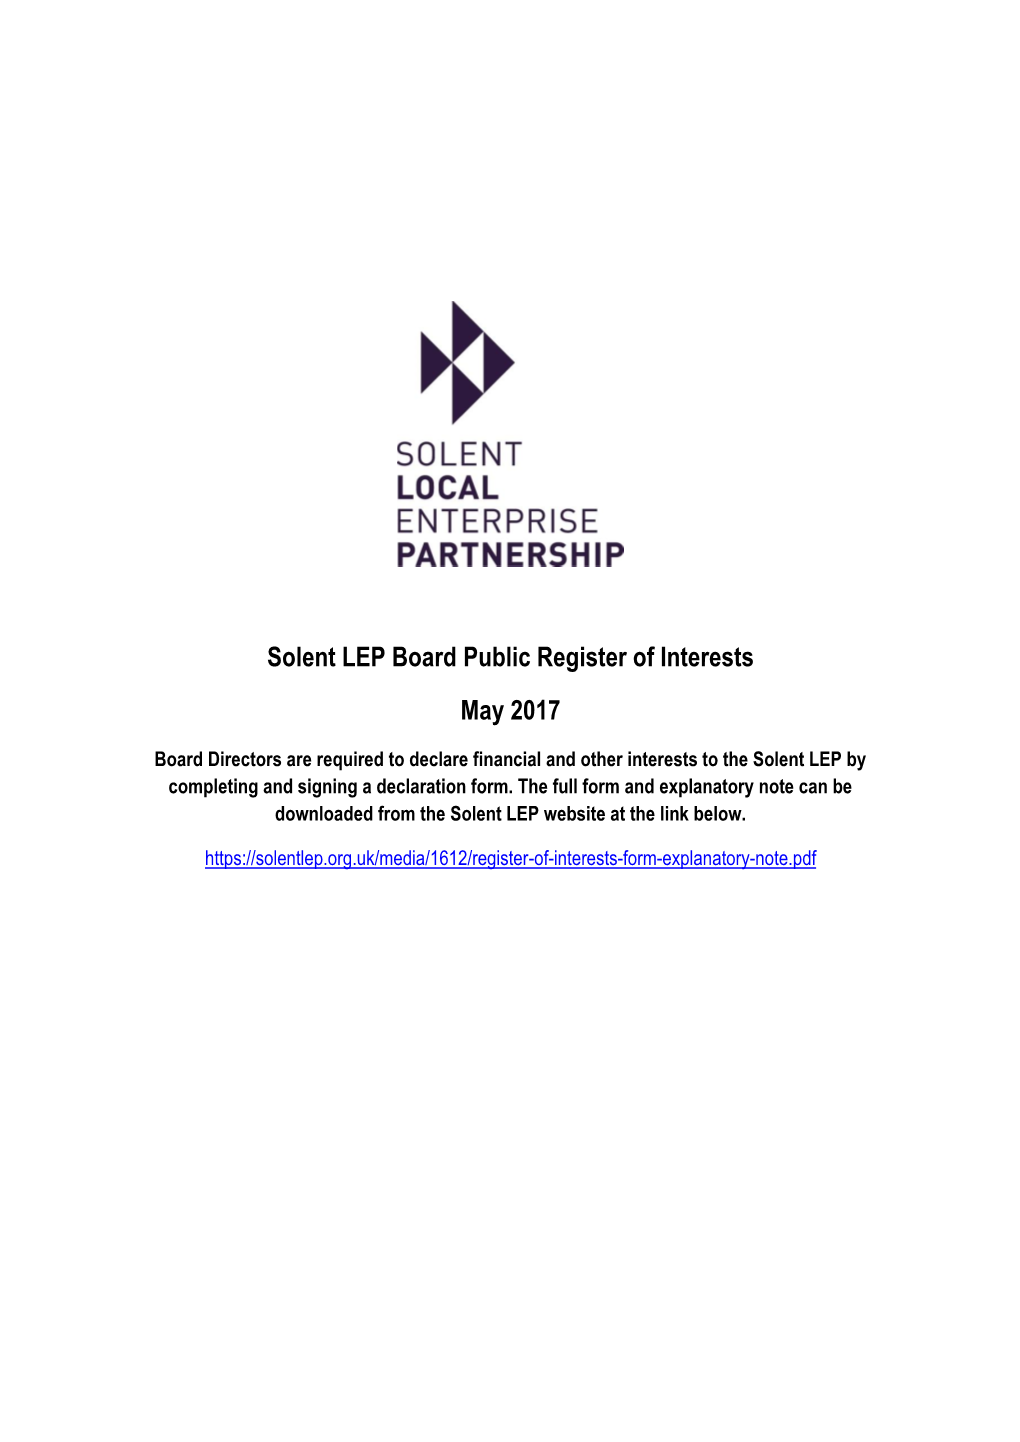 Solent LEP Board Public Register of Interests May 2017